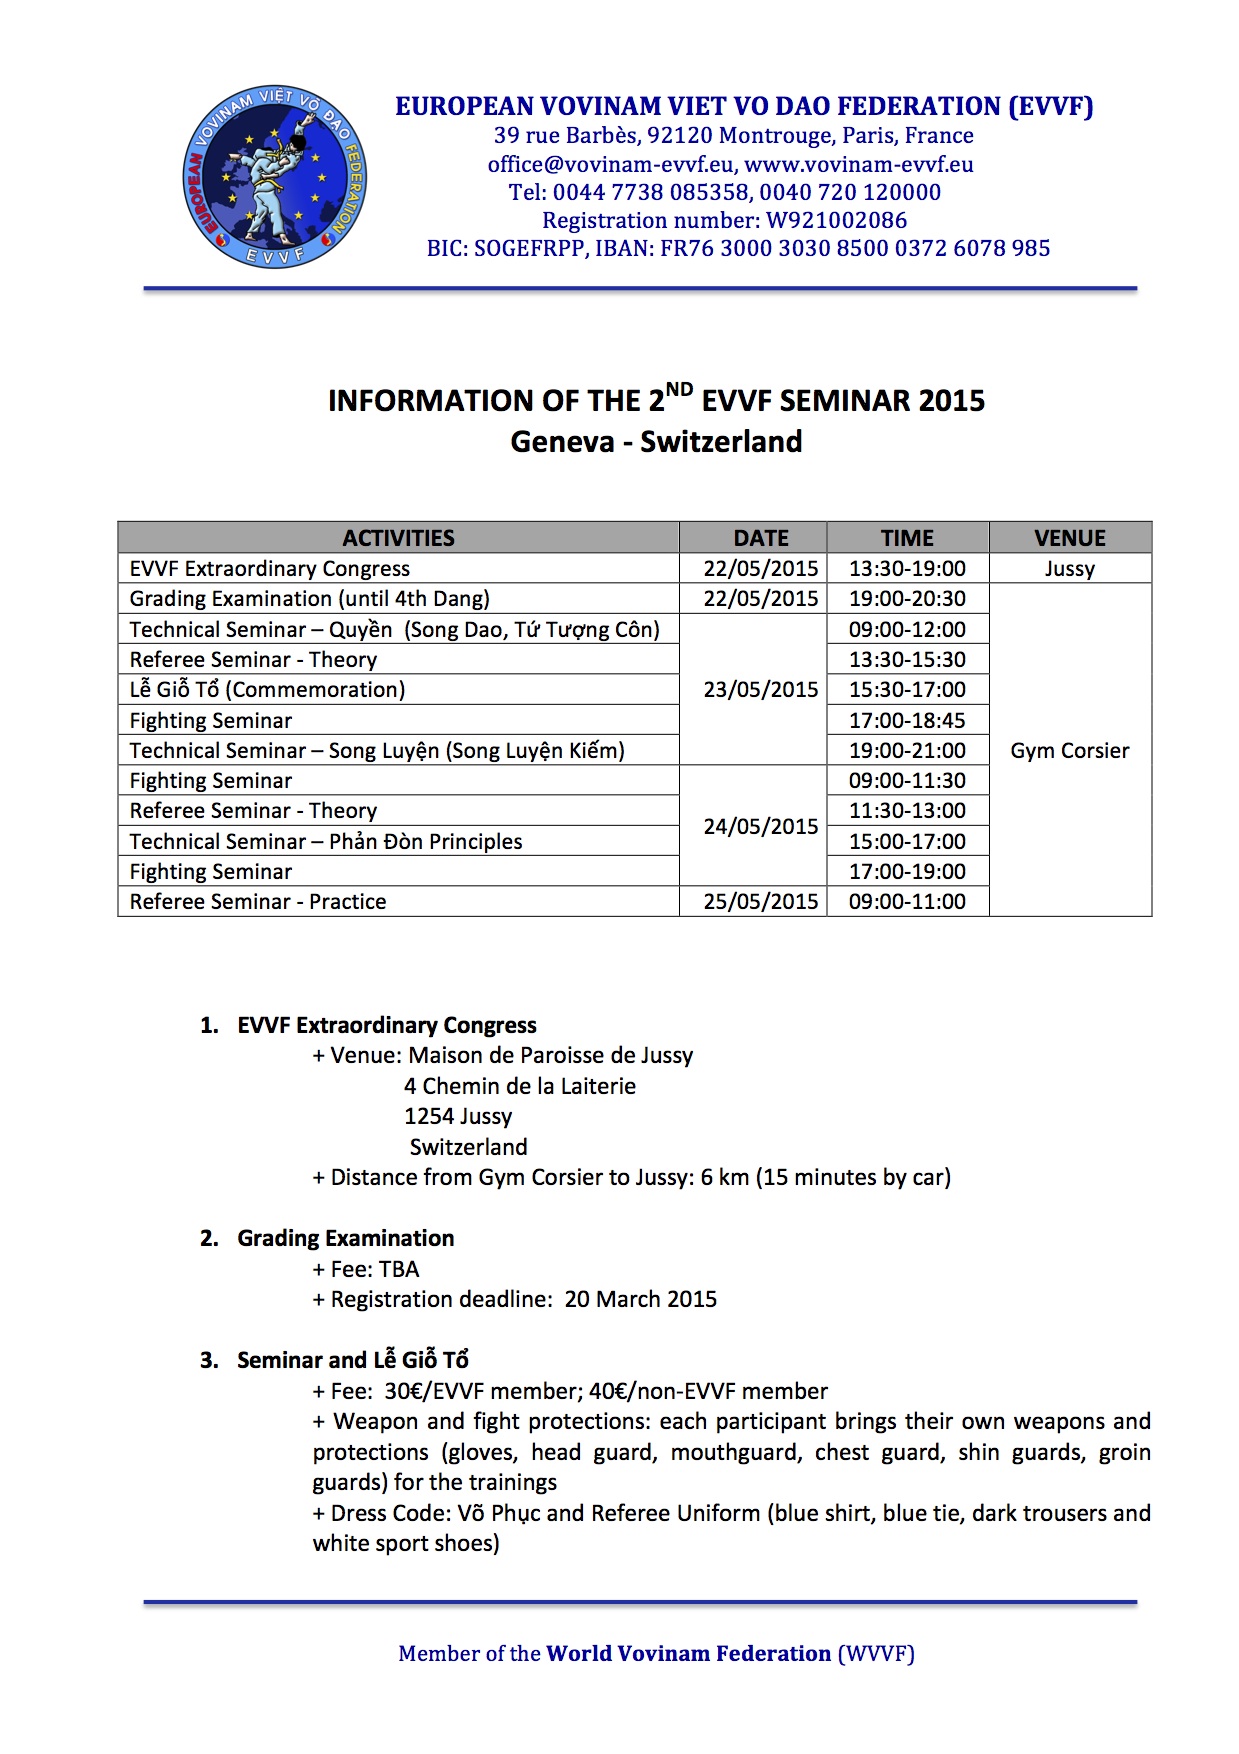 The 2nd EVVF Seminar 2015 - Information